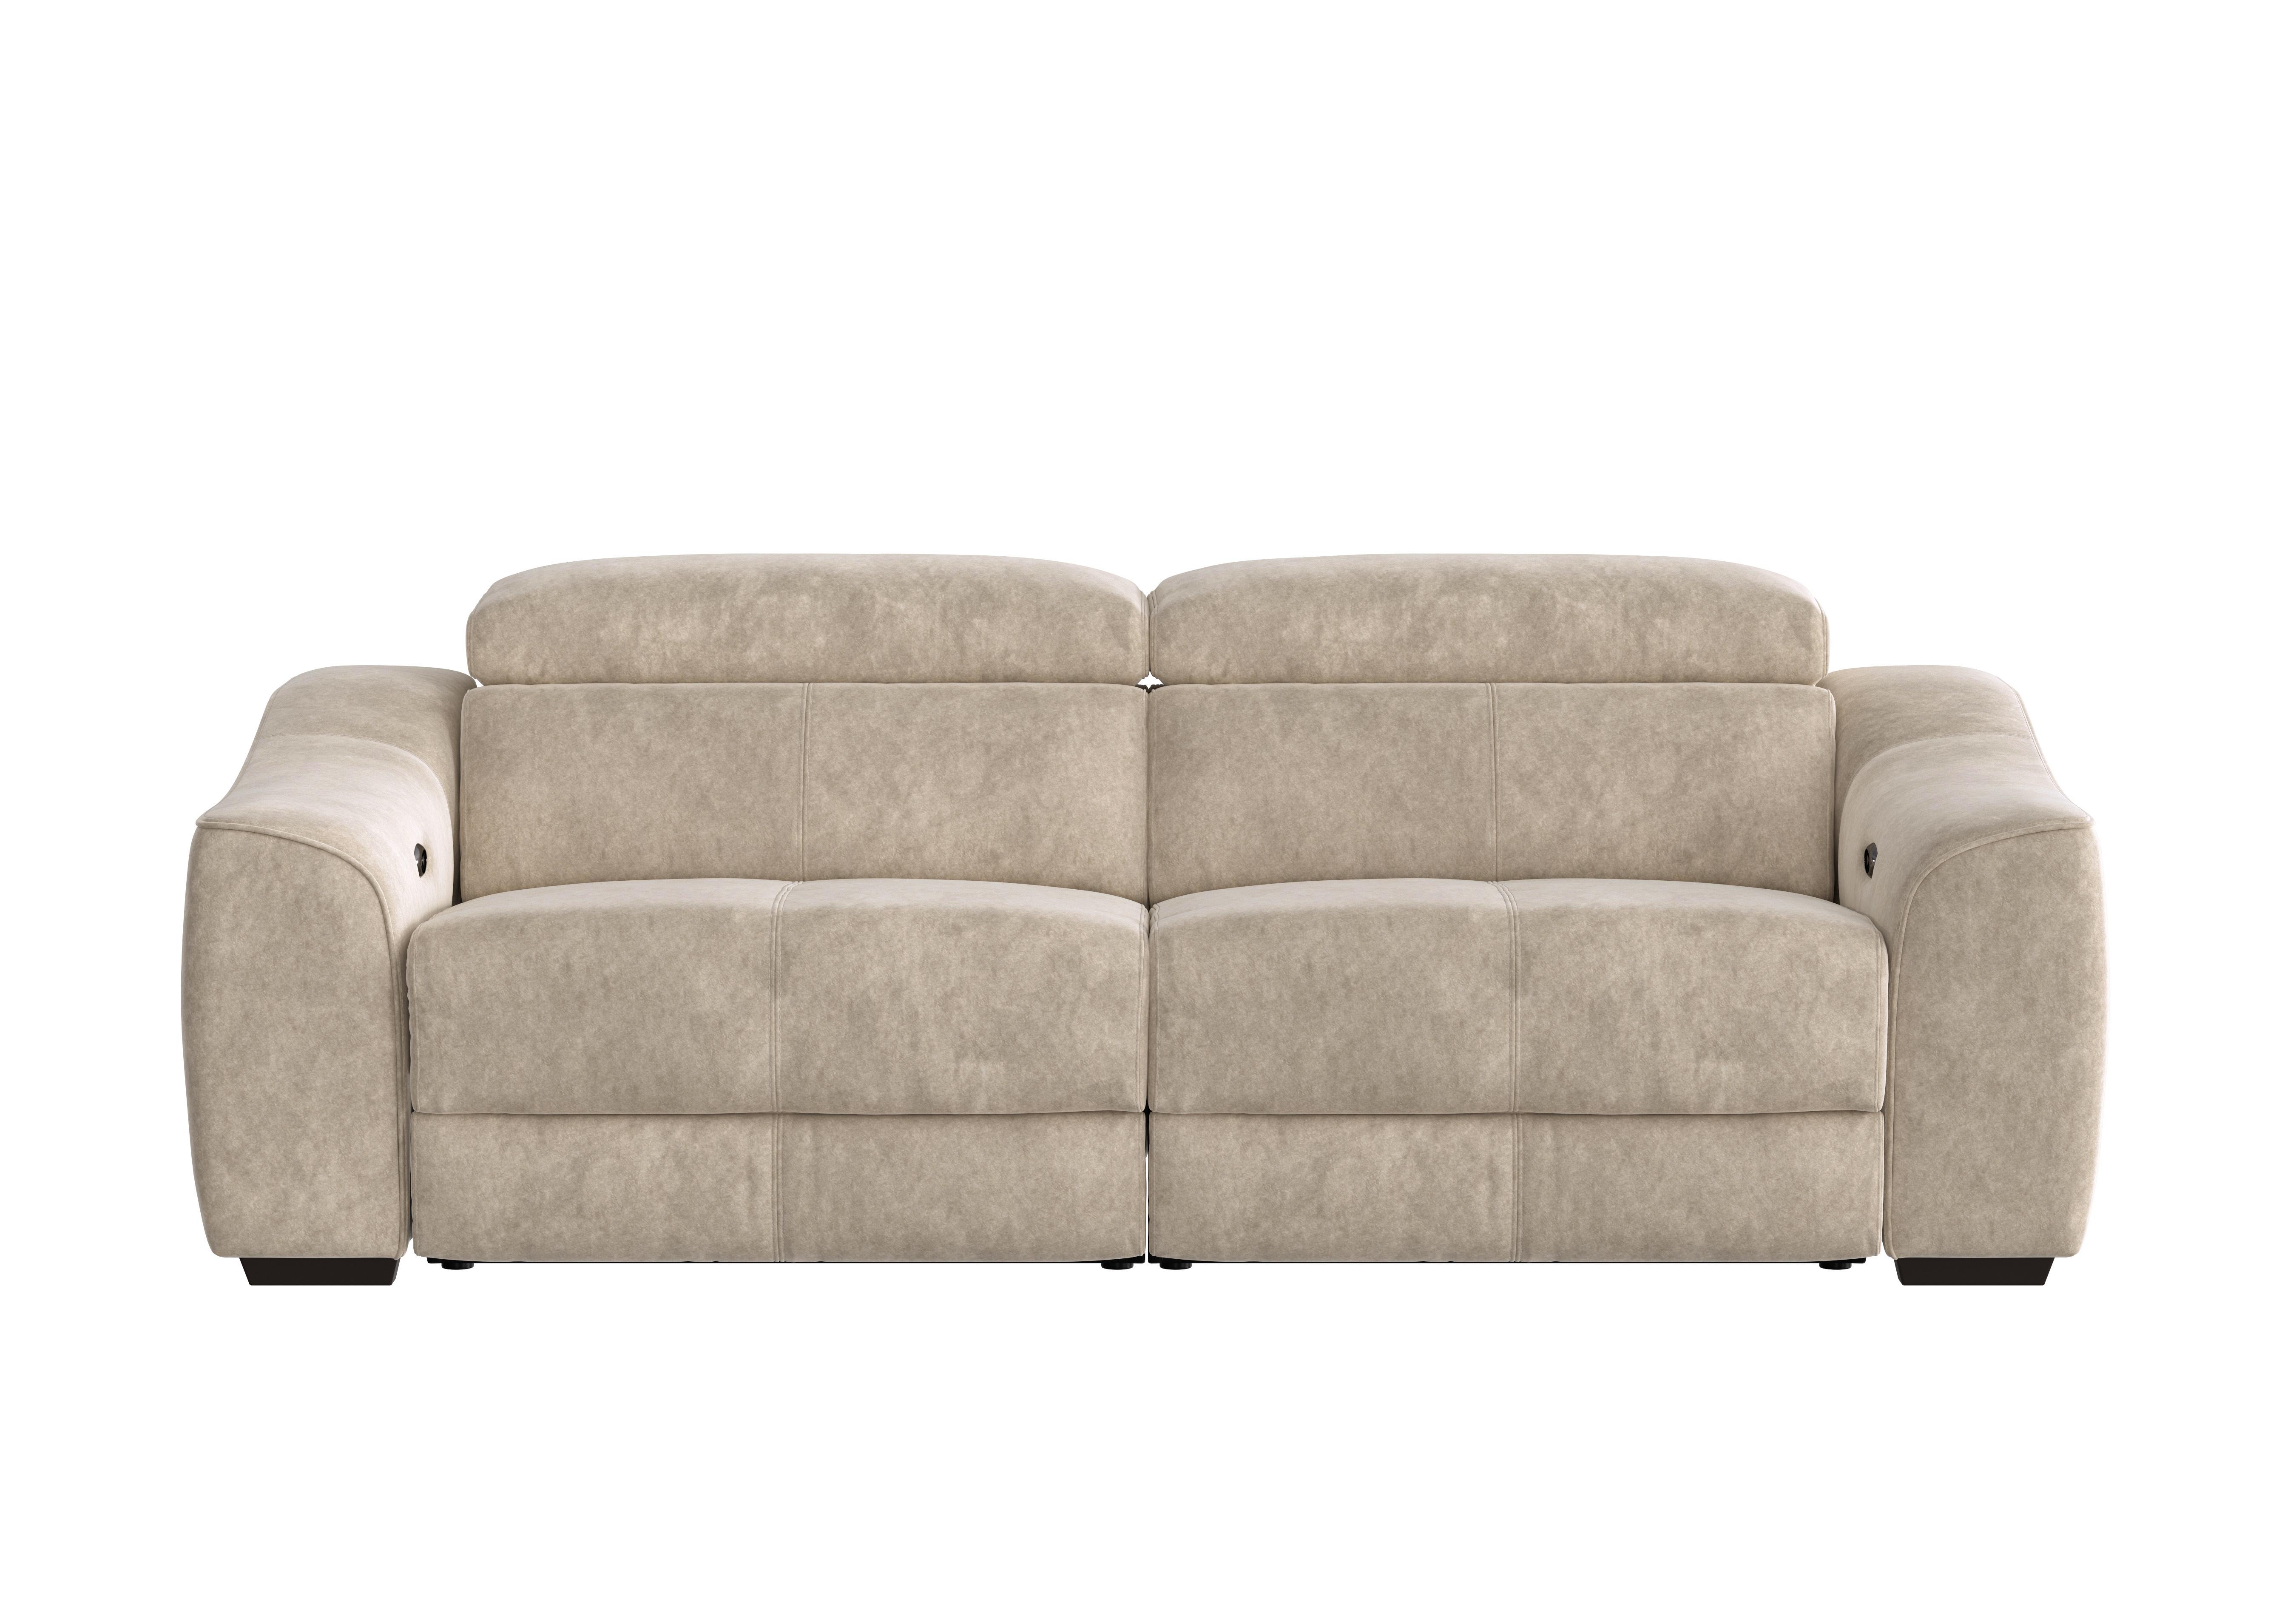 Elixir 3 Seater Fabric Sofa in Bfa-Bnn-R26 Fv2 Cream on Furniture Village